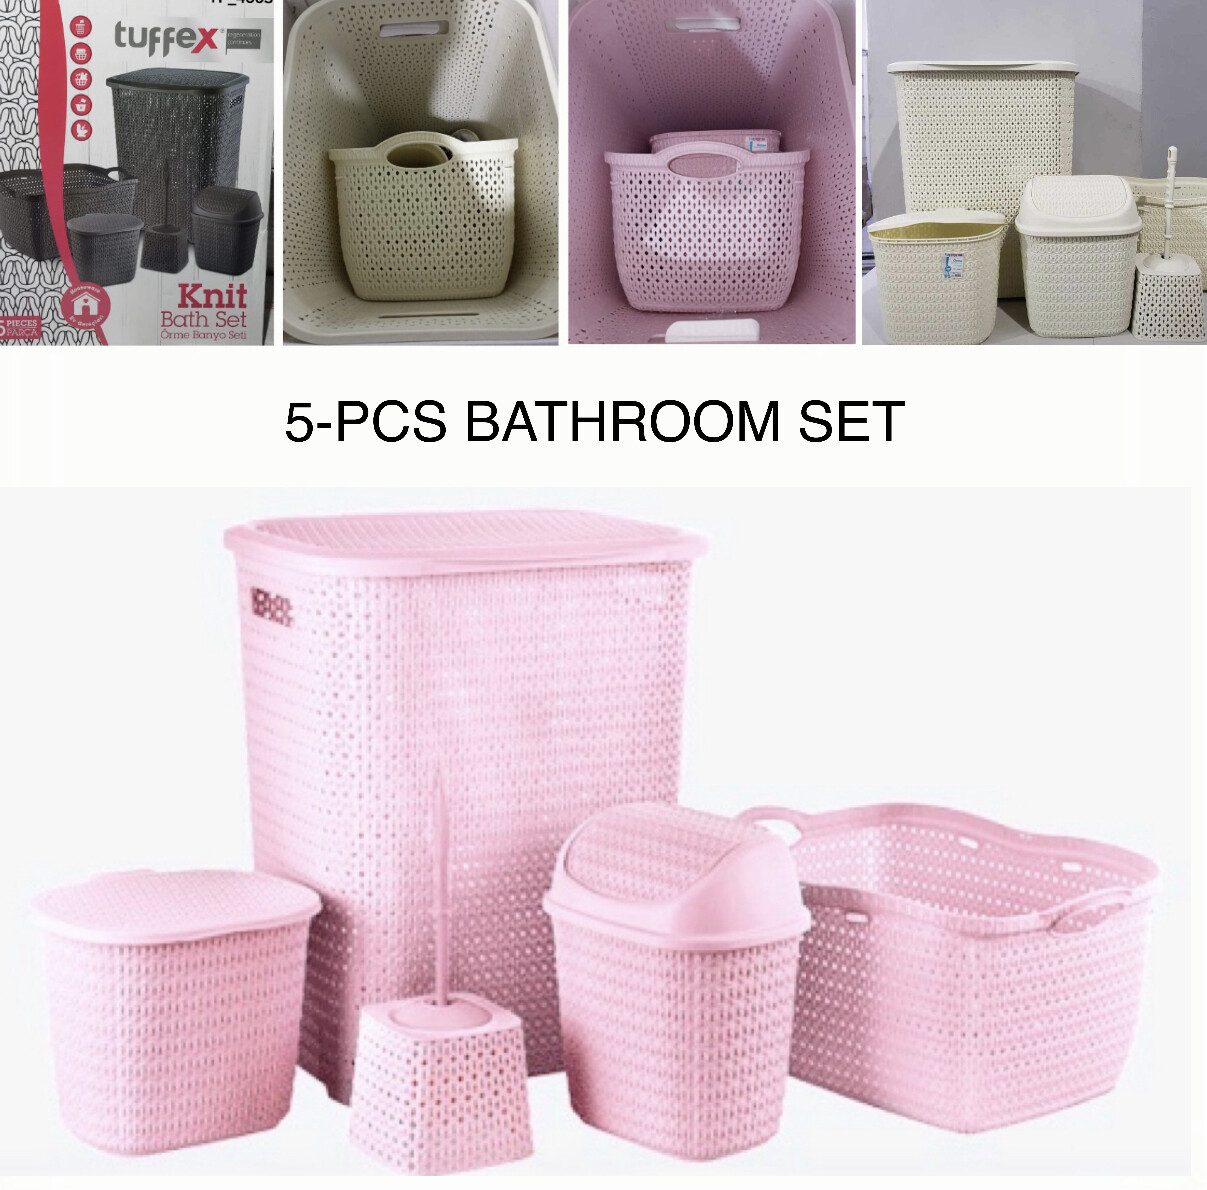 5-Pc Bathroom Set